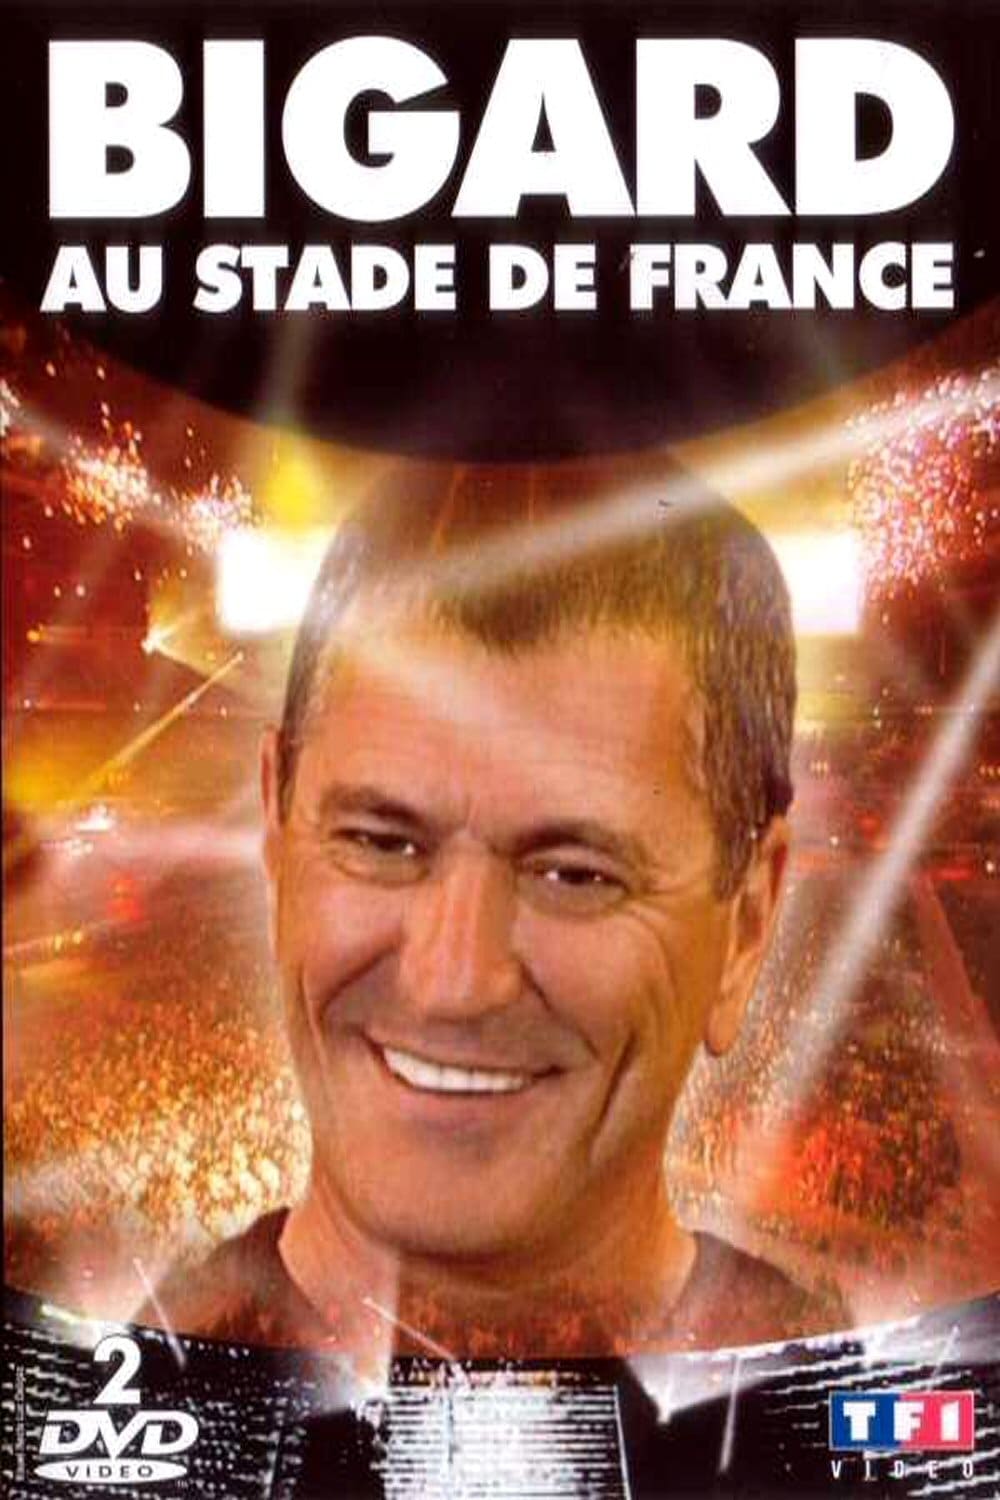 Bigard at the Stade de France